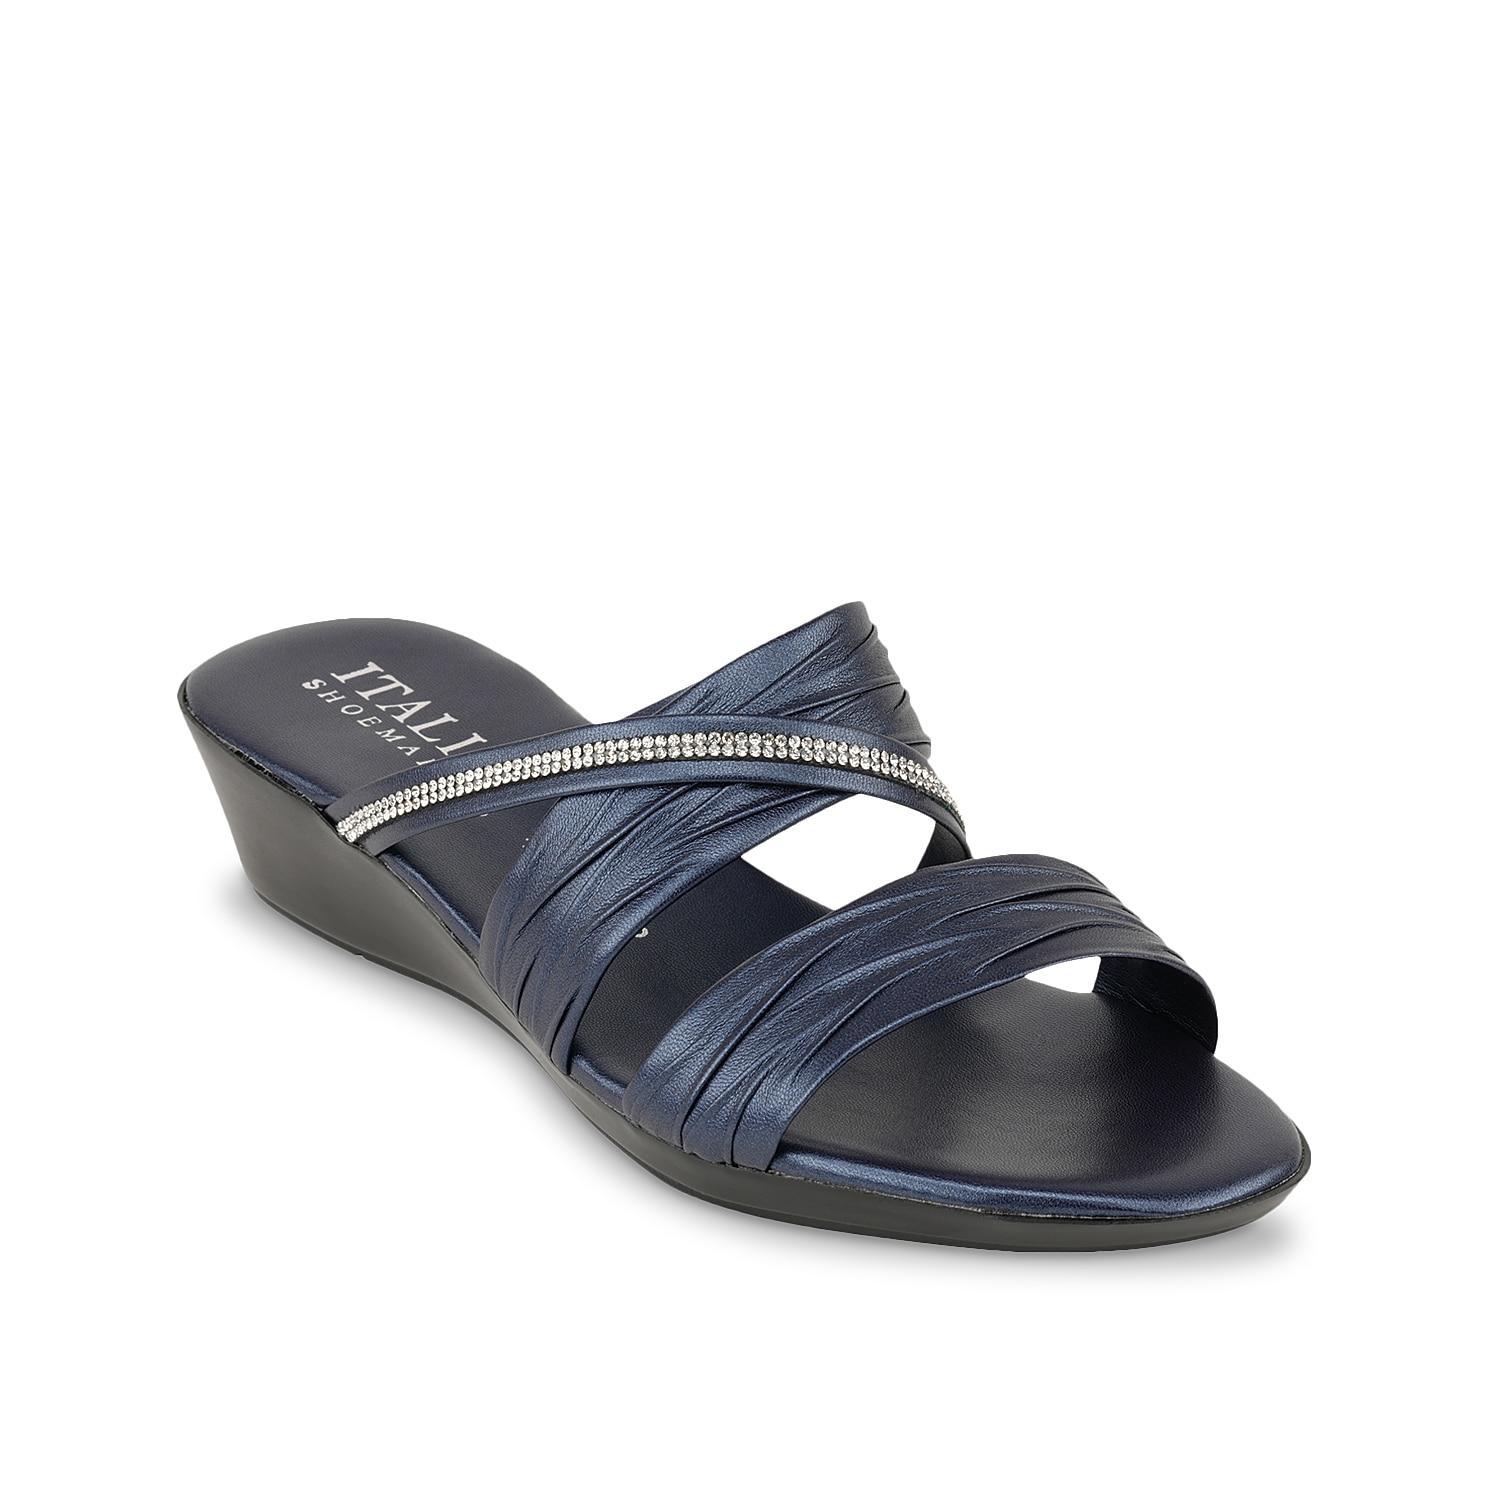 Womens Italian Shoemakers Hollis Wedge Sandals Black Product Image